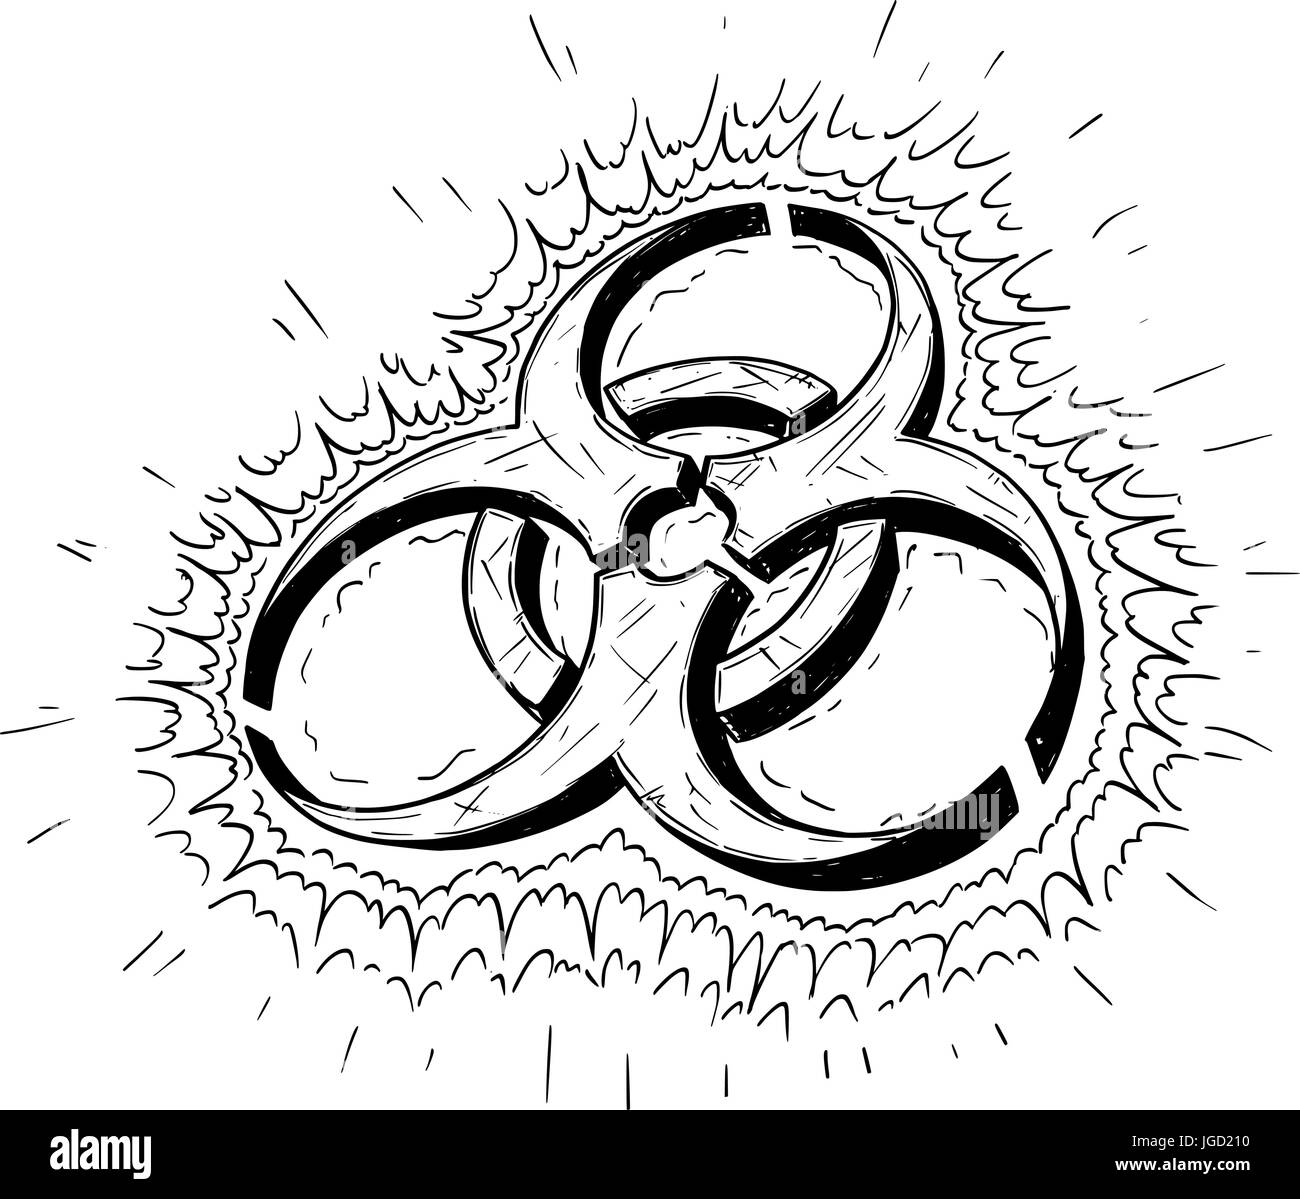 Vector cartoon drawing illustration of biohazard symbol Stock Vector